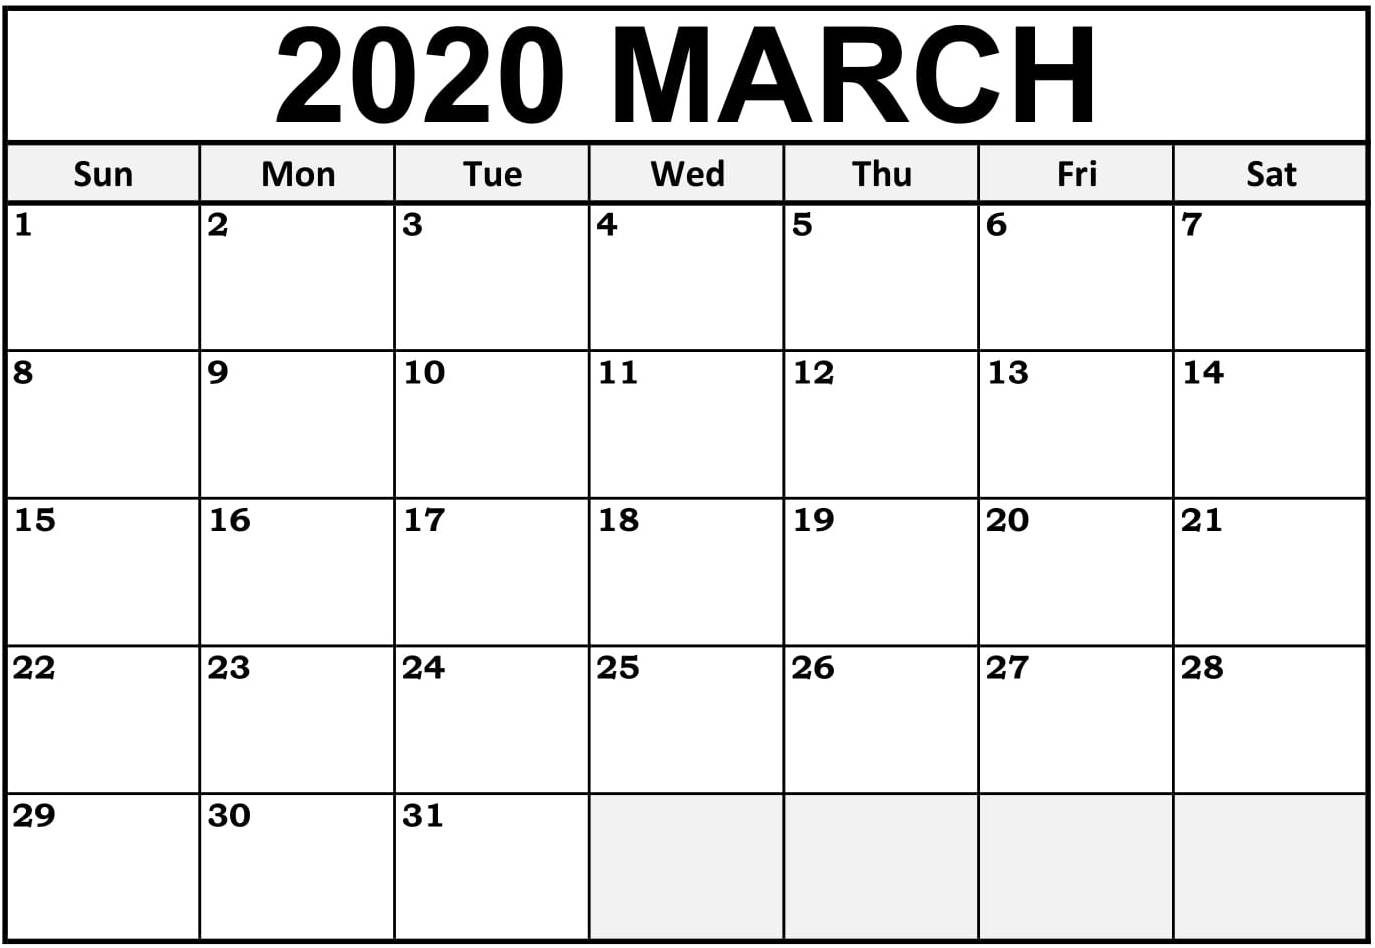 March 2020 Calendar Canada With National Holidays - Set Your March 2020 Calendar Canada Printable